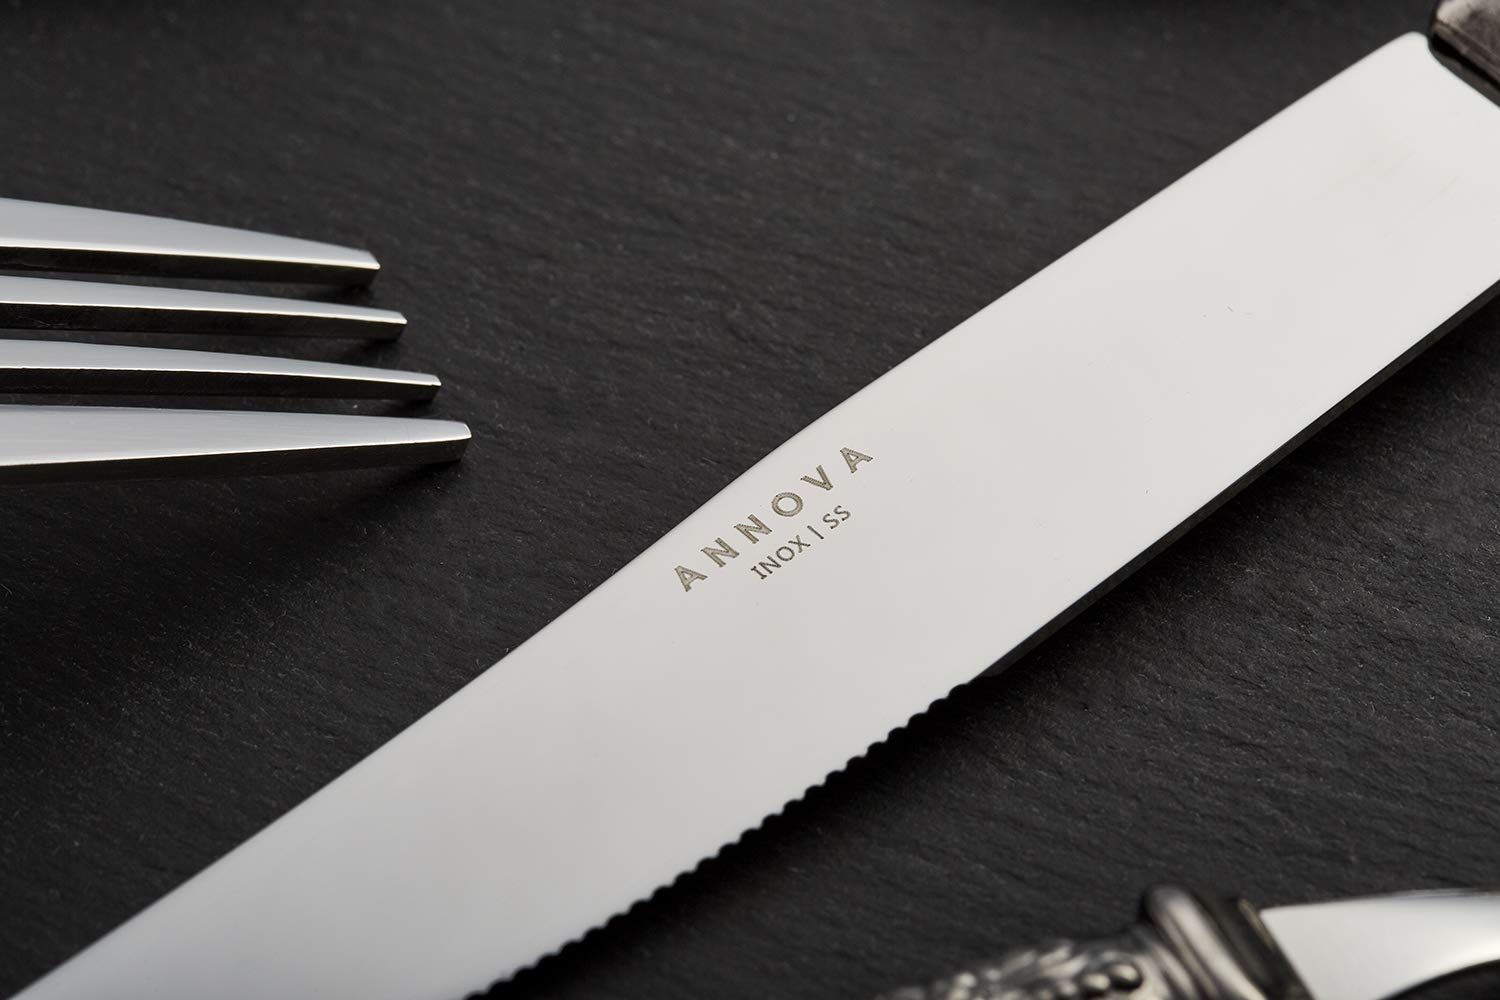 Annova Flatware 20 Pieces Set/Stainless Steel Vintage Silverware/Cutlery, Dinner Knife/Dinner Fork/Salad Fork/Dinner Spoon/Dessert Spoon, Mirror Polished, Service for 4 - Ivory/Cream